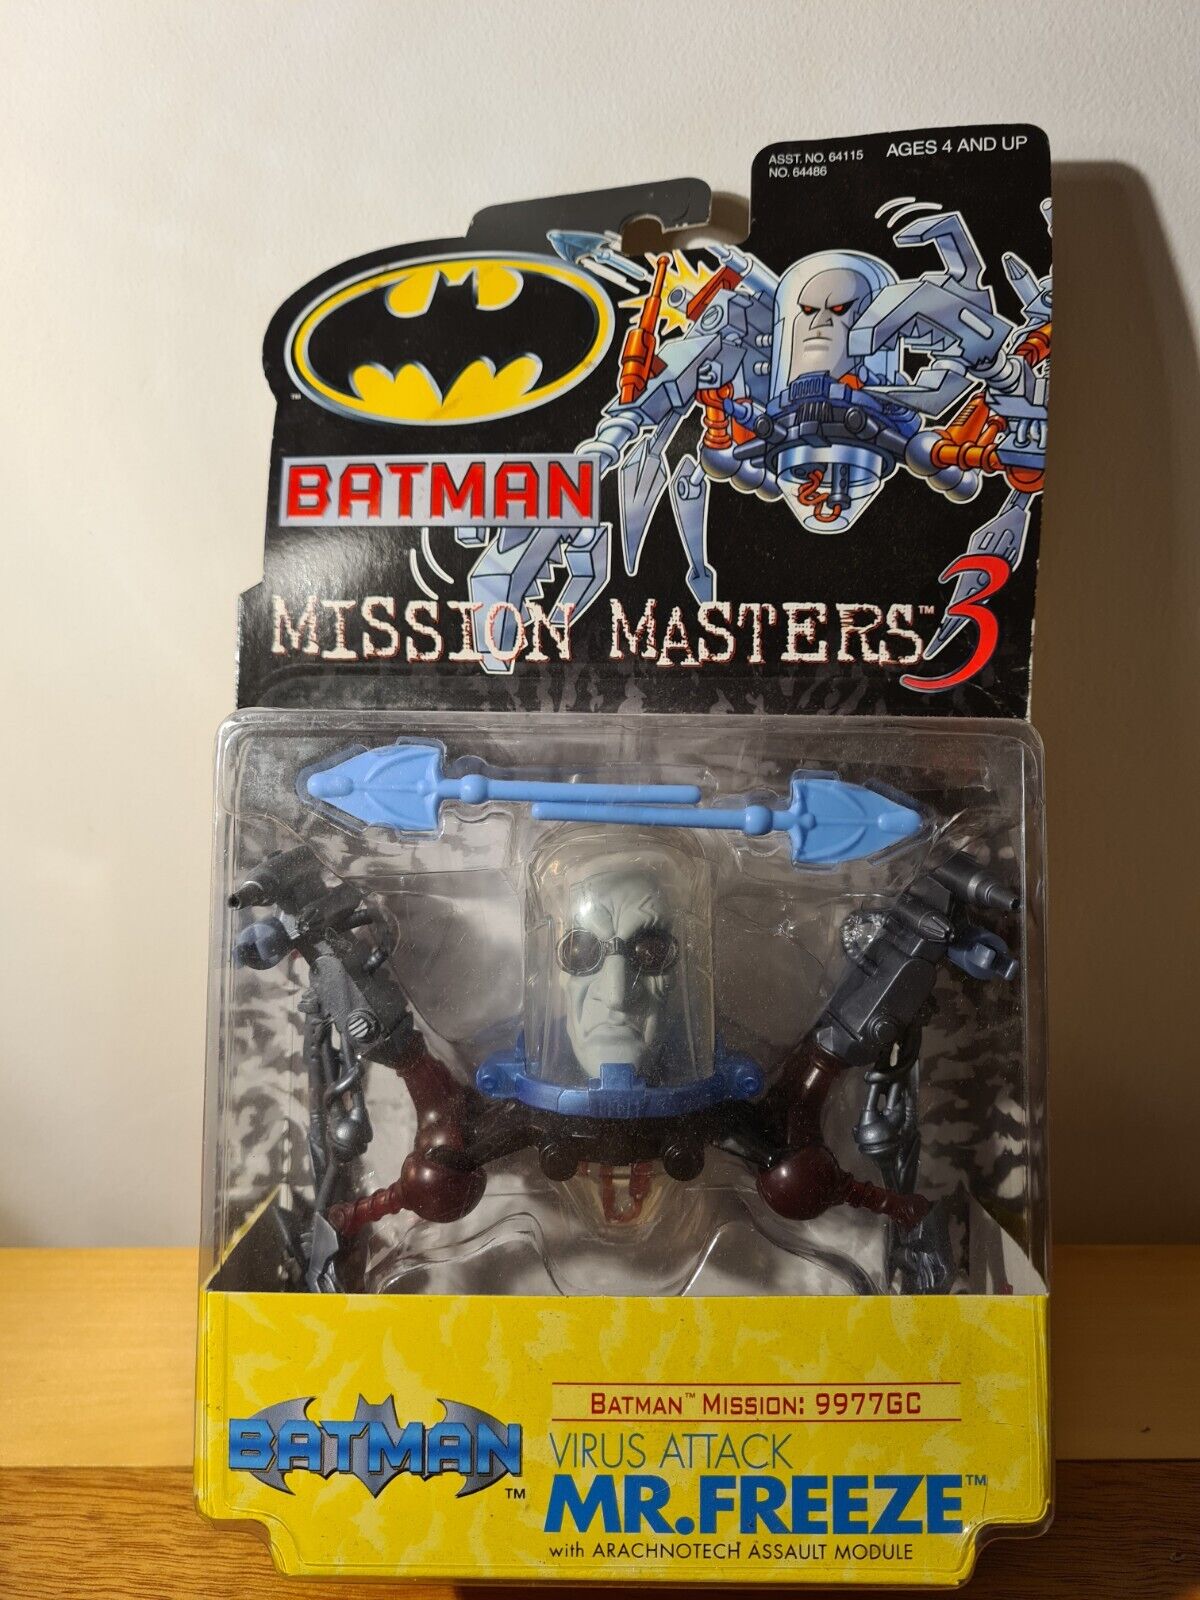 Mr. Freeze Virus Attack Batman Mission Masters 3 Action Figure VTG Hasbro 2000